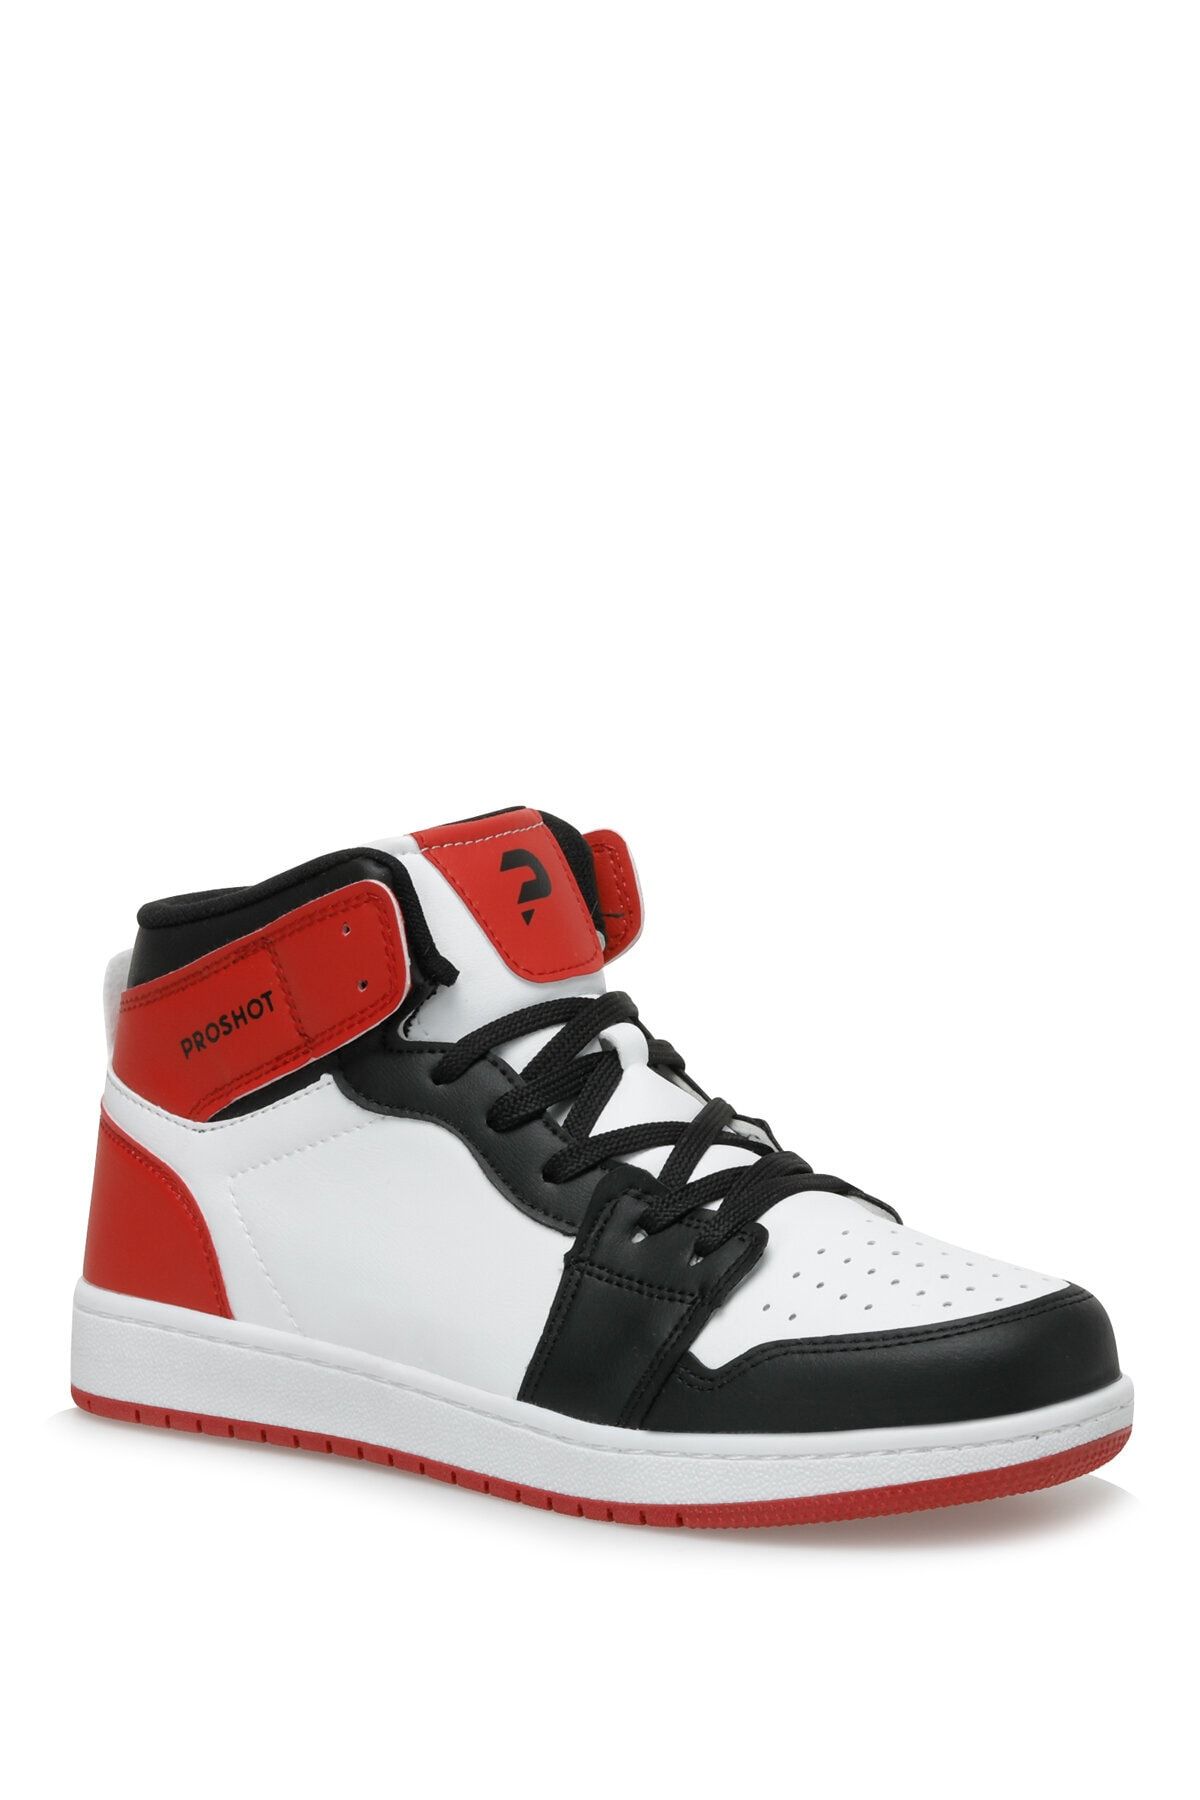 Proshot Floyd Hı 3fx Beyaz Erkek High Sneaker